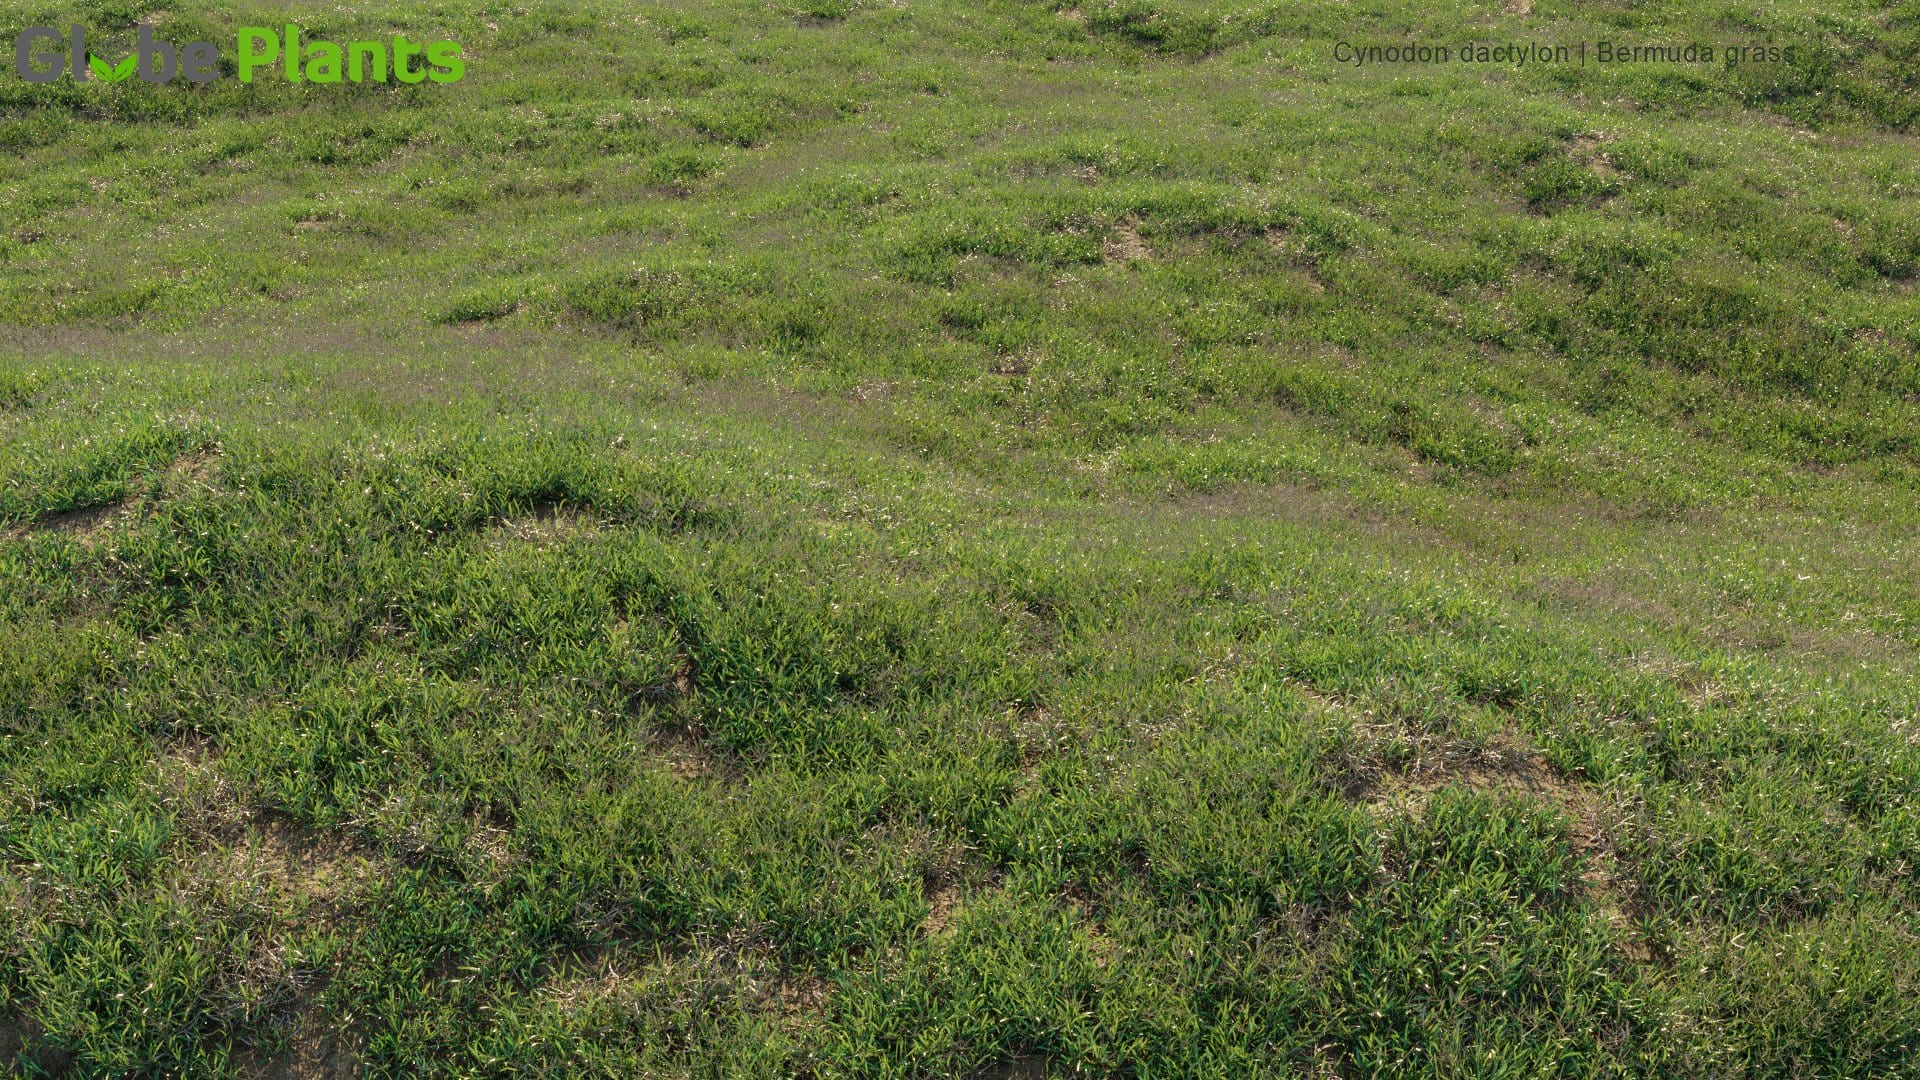 Cynodon Dactylon - Bermuda Grass, Couch Grass (3D Model)